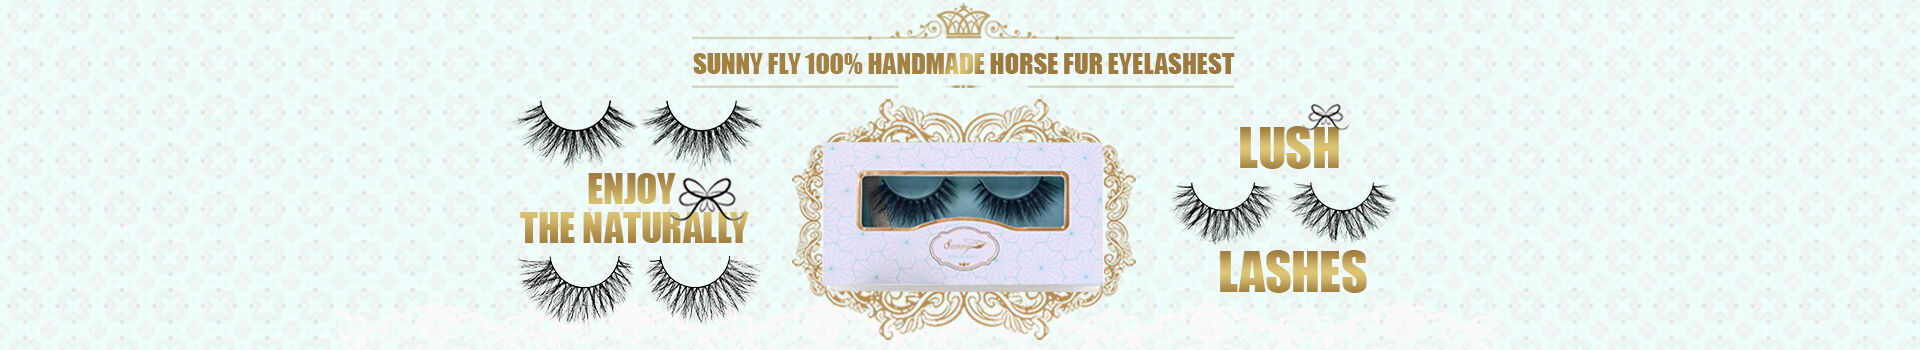 Real Horse Fur Eyelashes